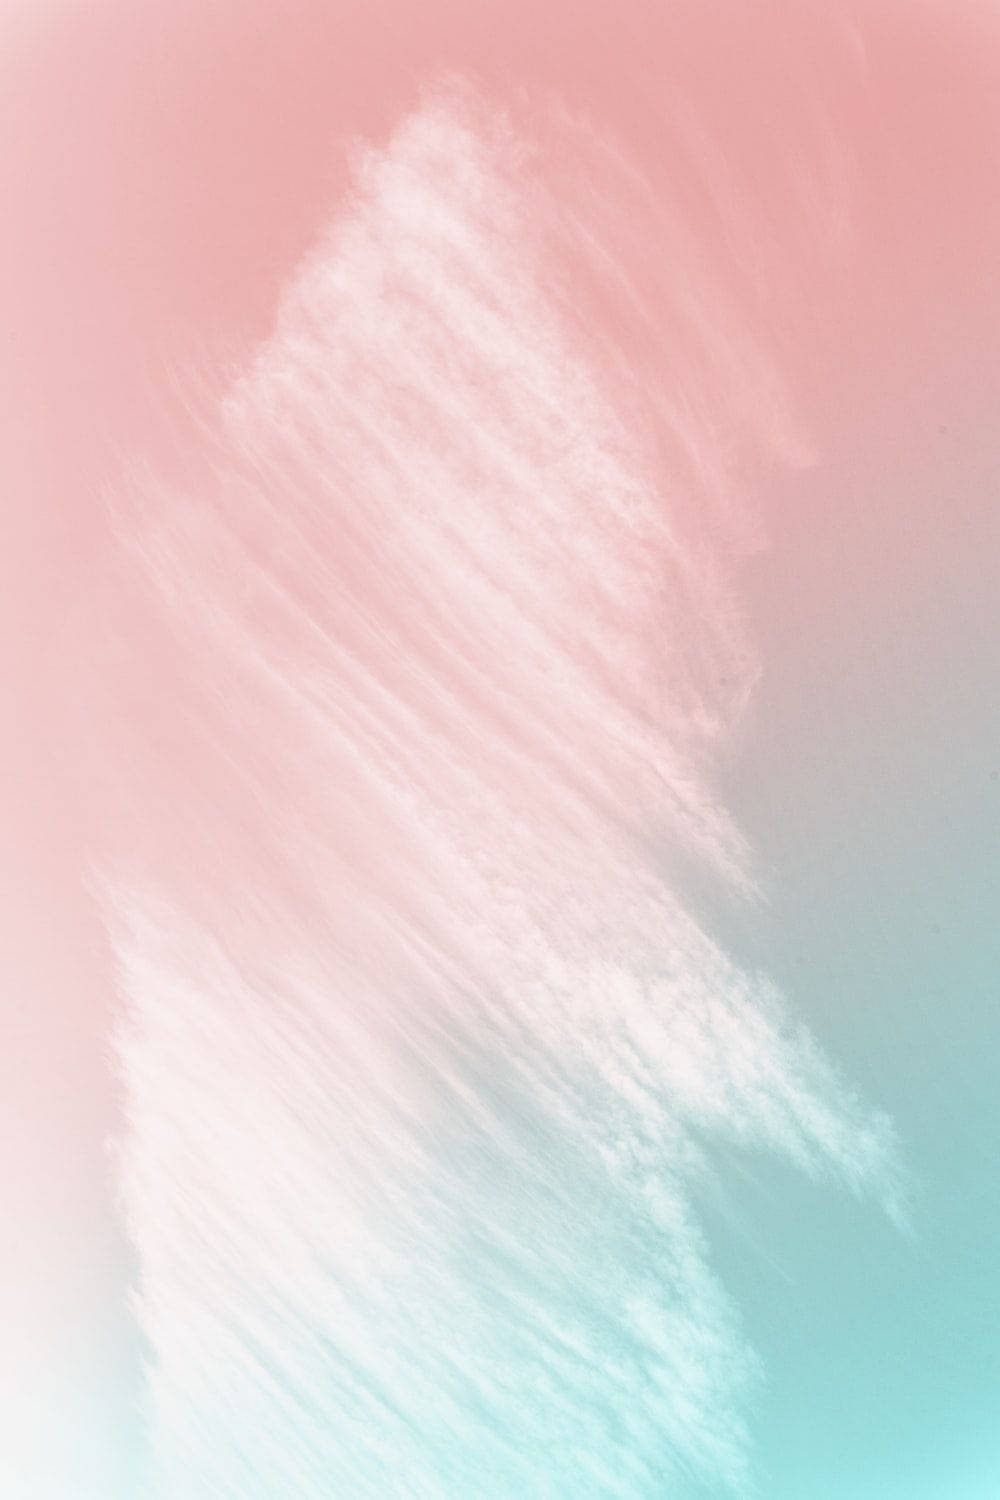 Pastel Ipad Gradient Pink Cyan Background